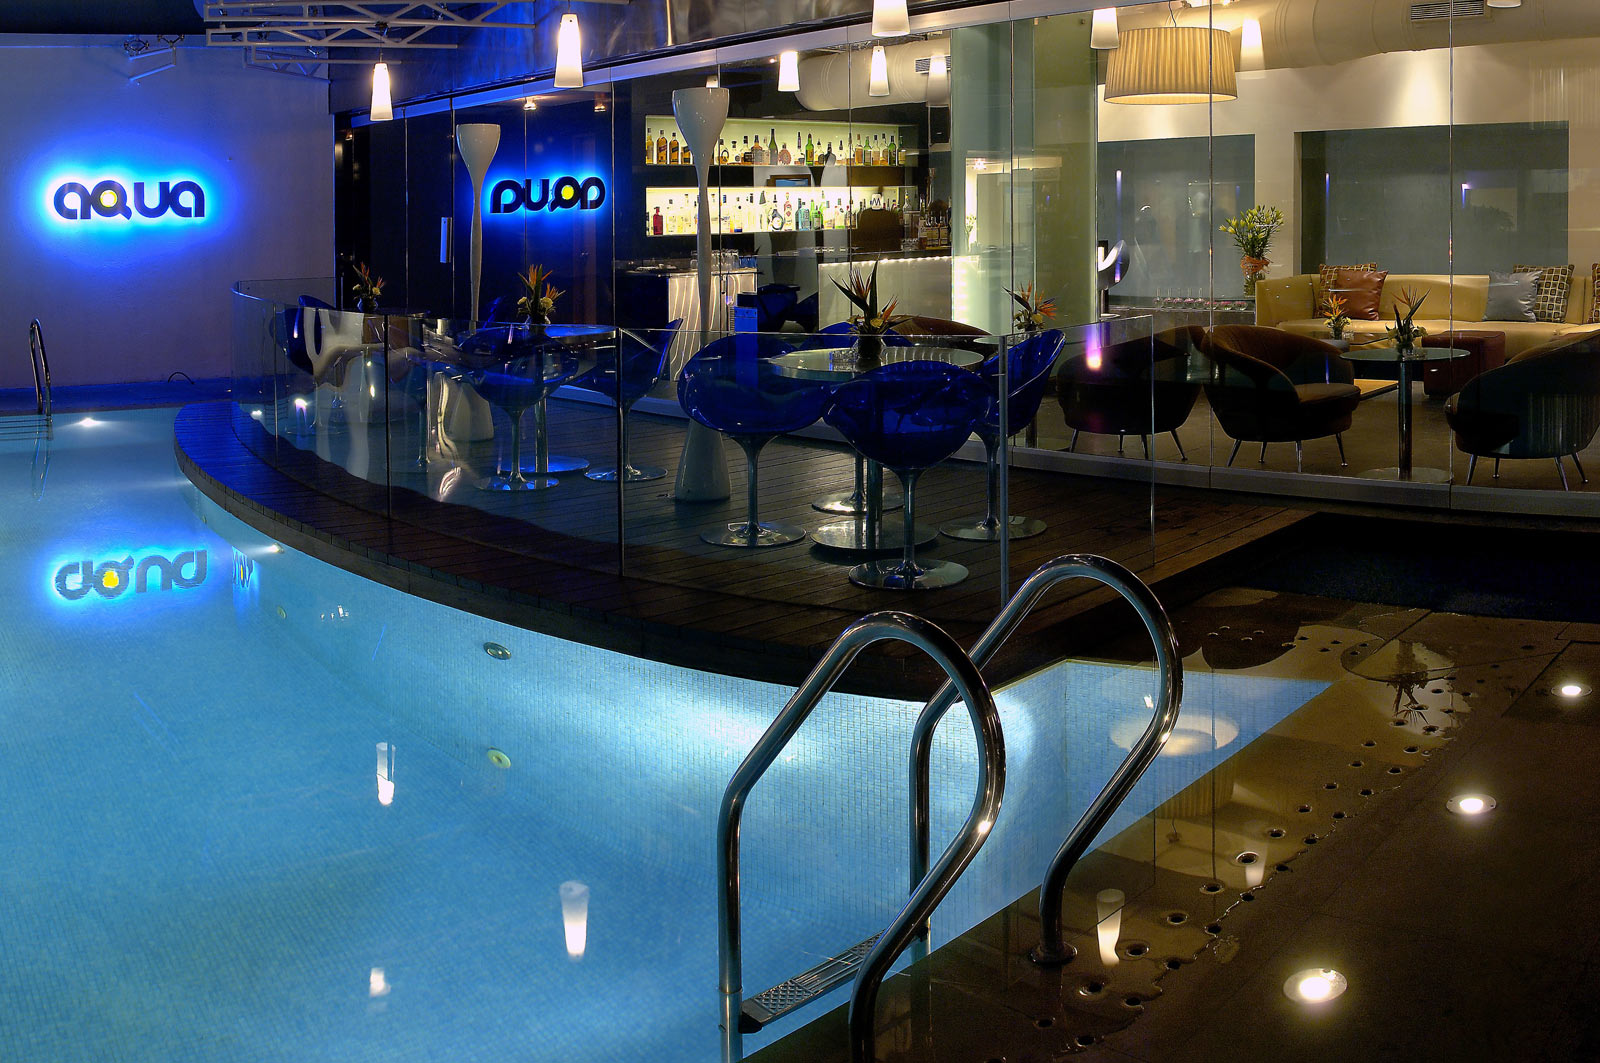 Aqua Poolside Bar at The Park Hotels Kolkata